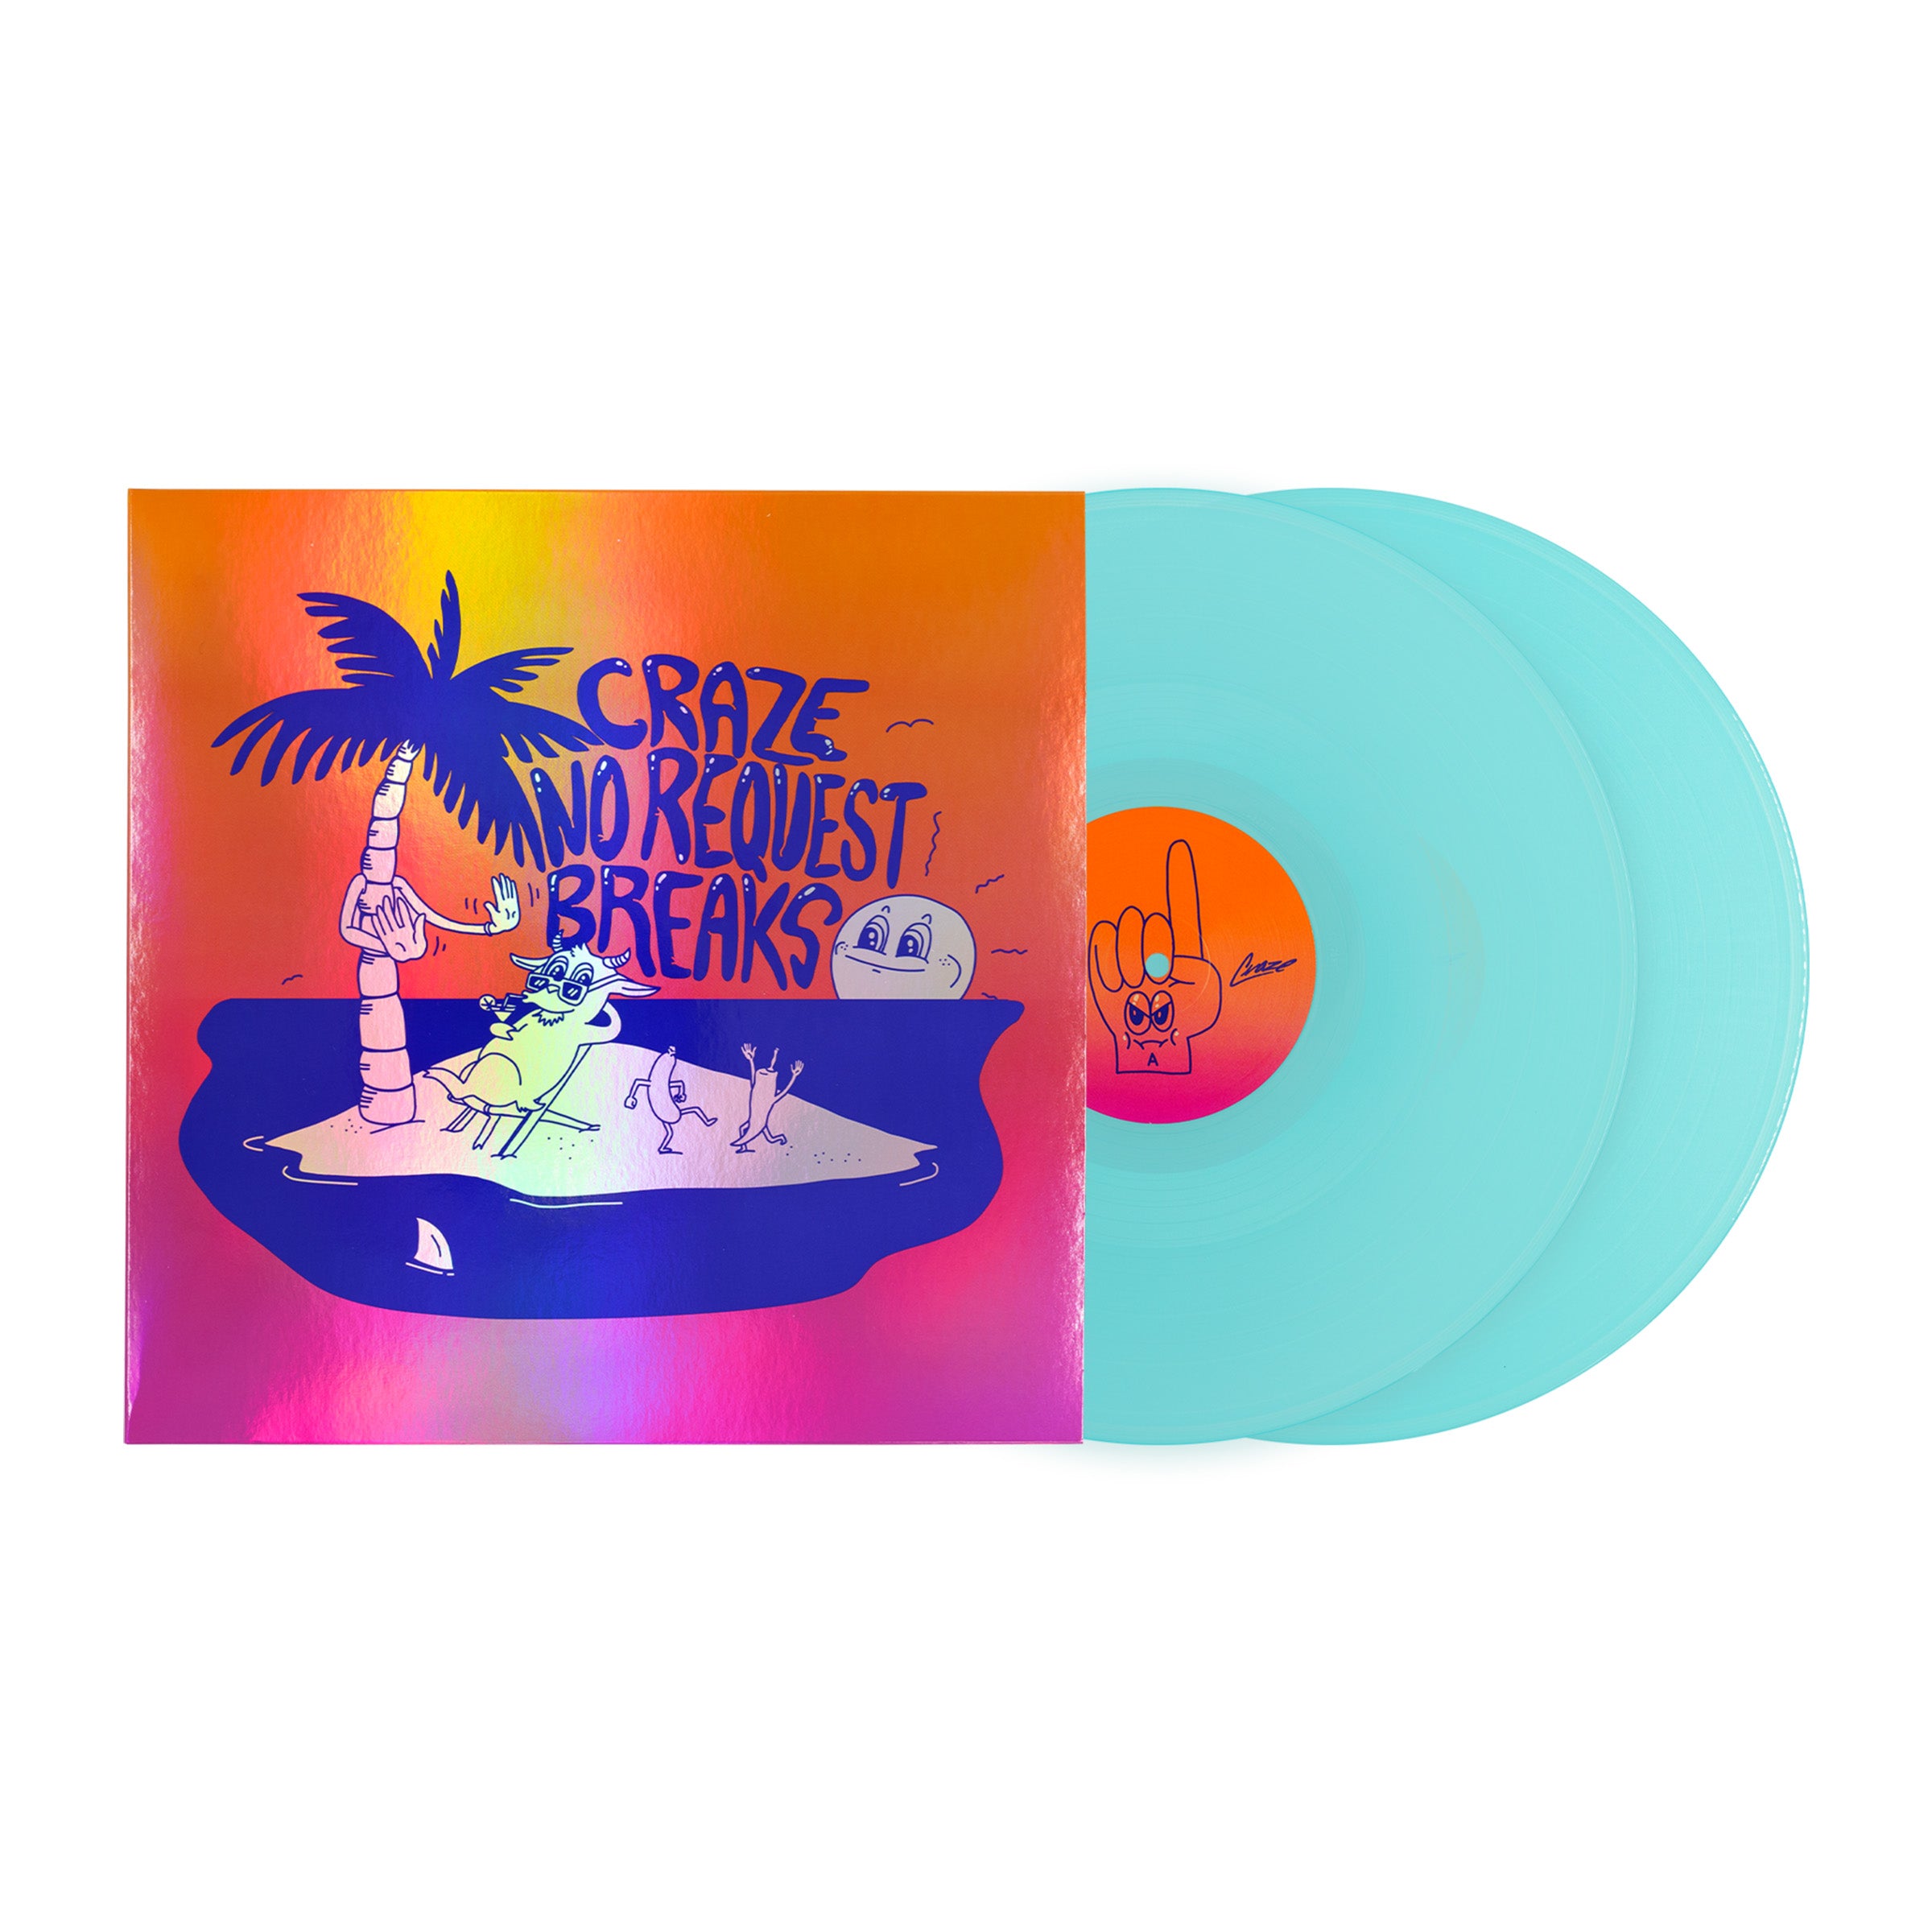 Serato 12” Craze No Request Breaks Control Vinyl (Pair)